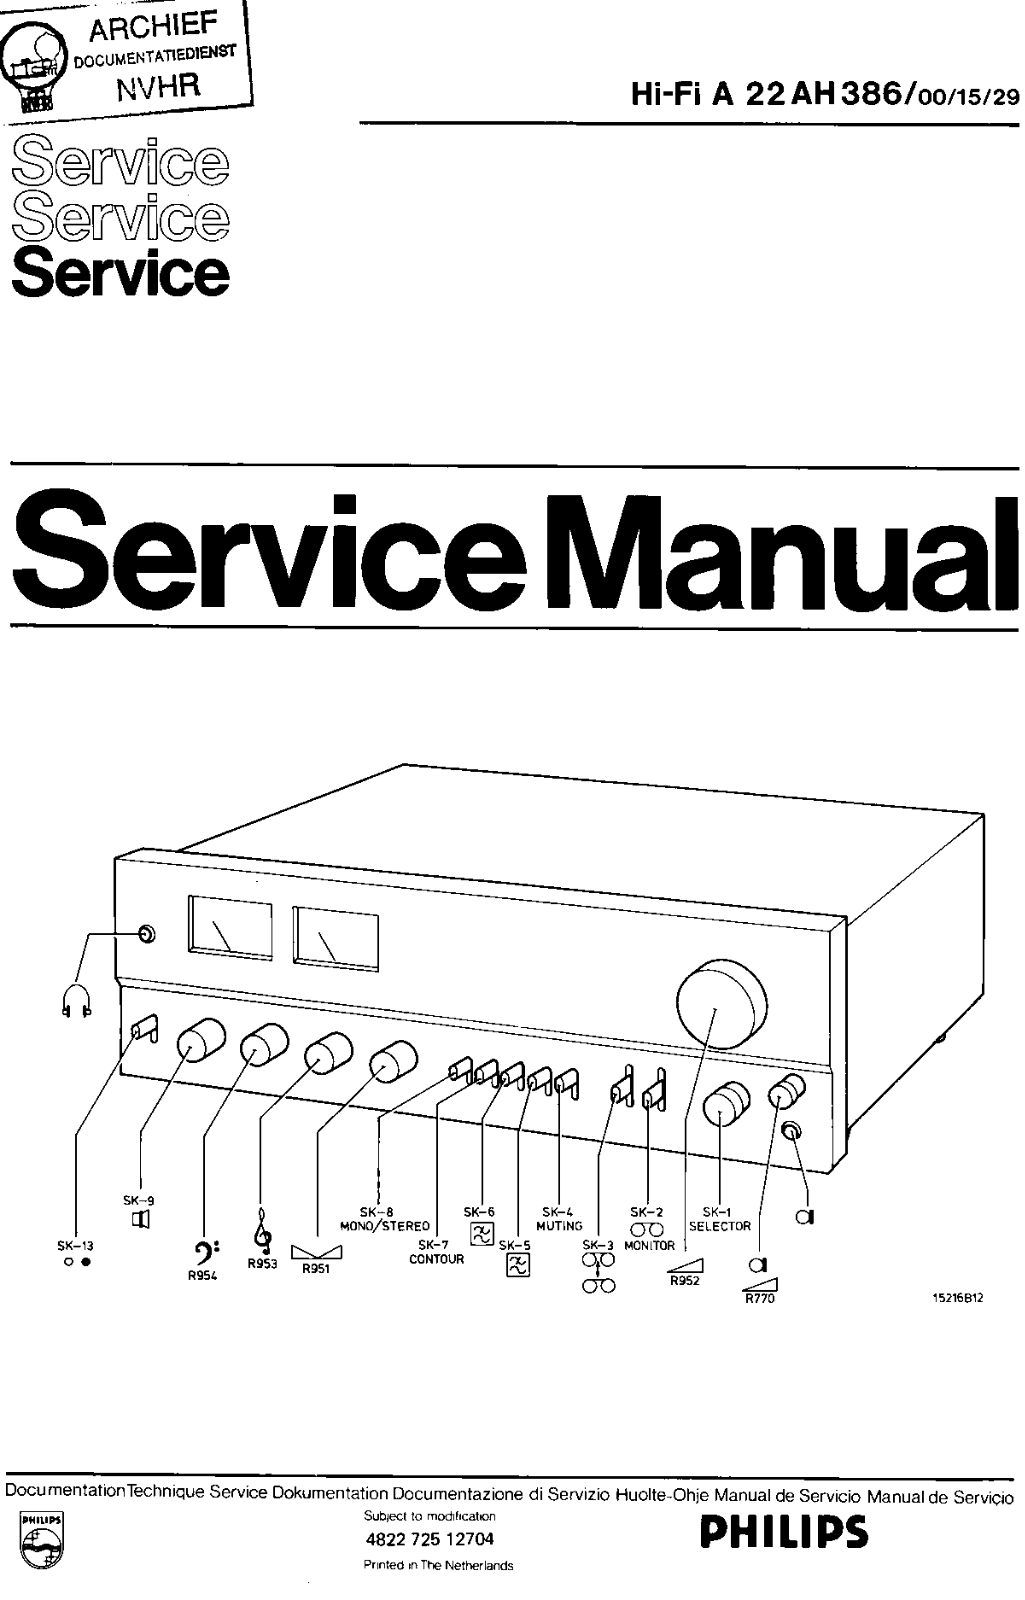 Philips 22-AH-386 Service Manual